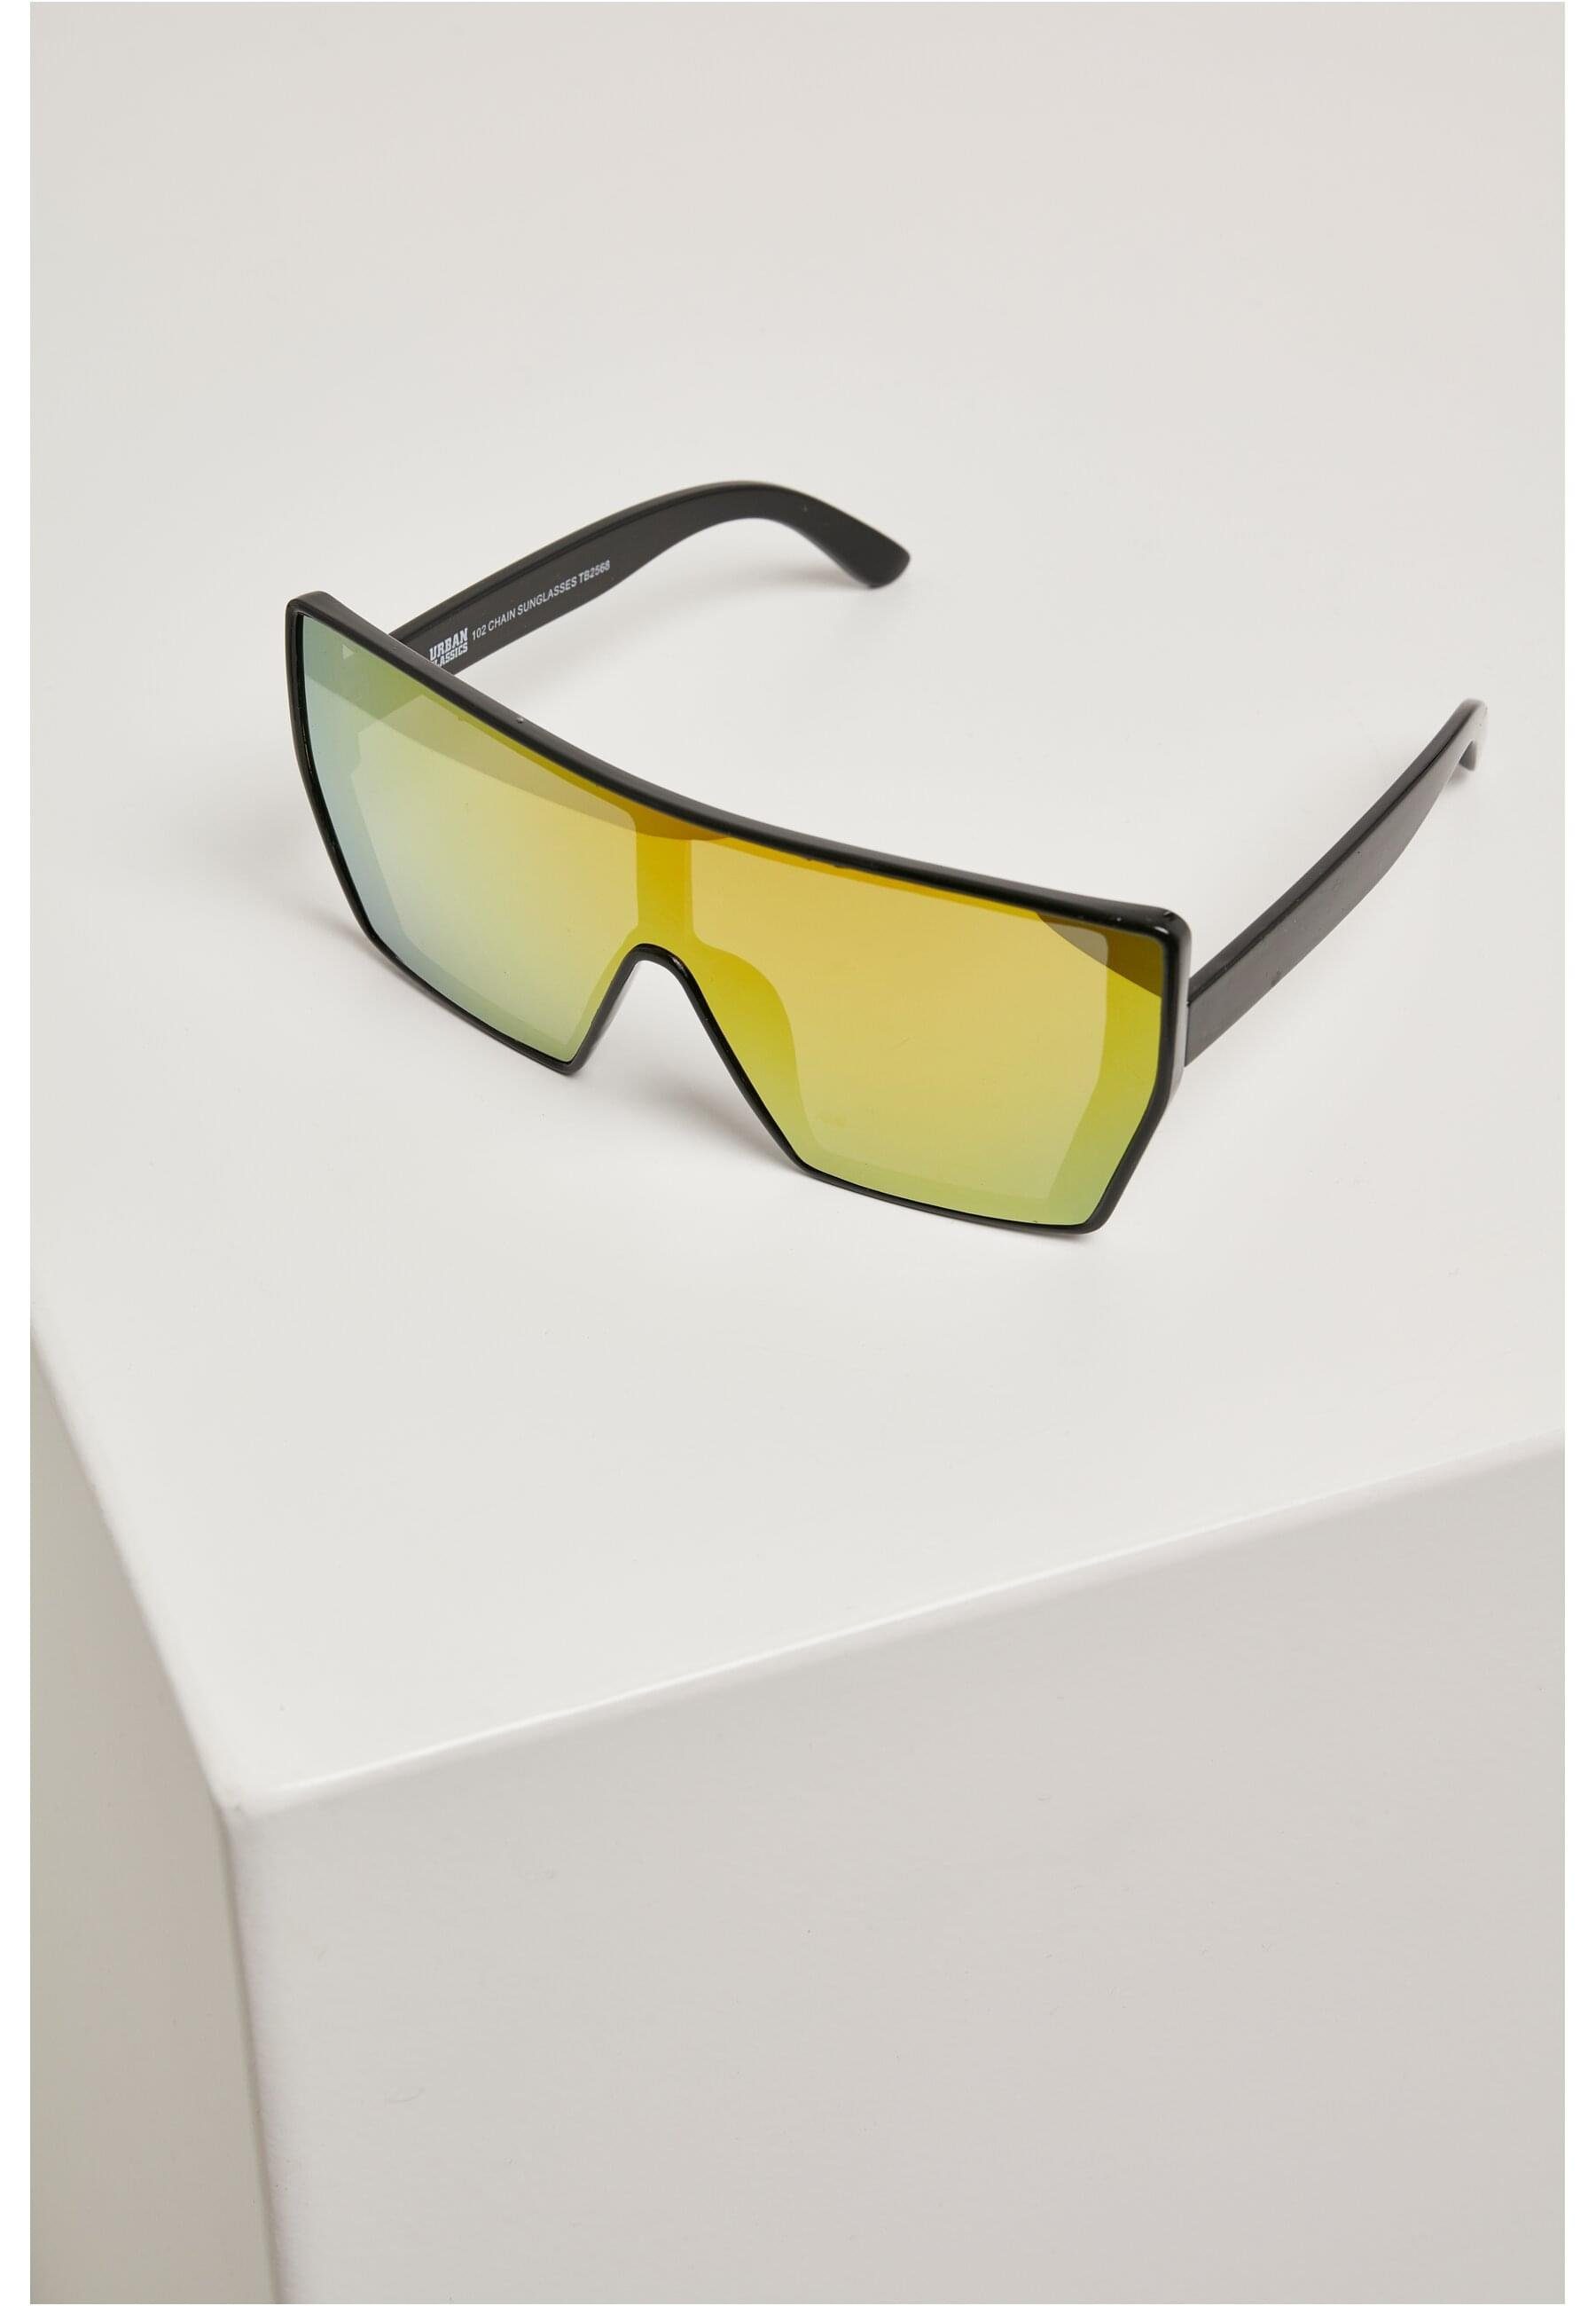 Chain Sunglasses 102 URBAN blk/yellow Chain Unisex 102 CLASSICS Sonnenbrille TB2568